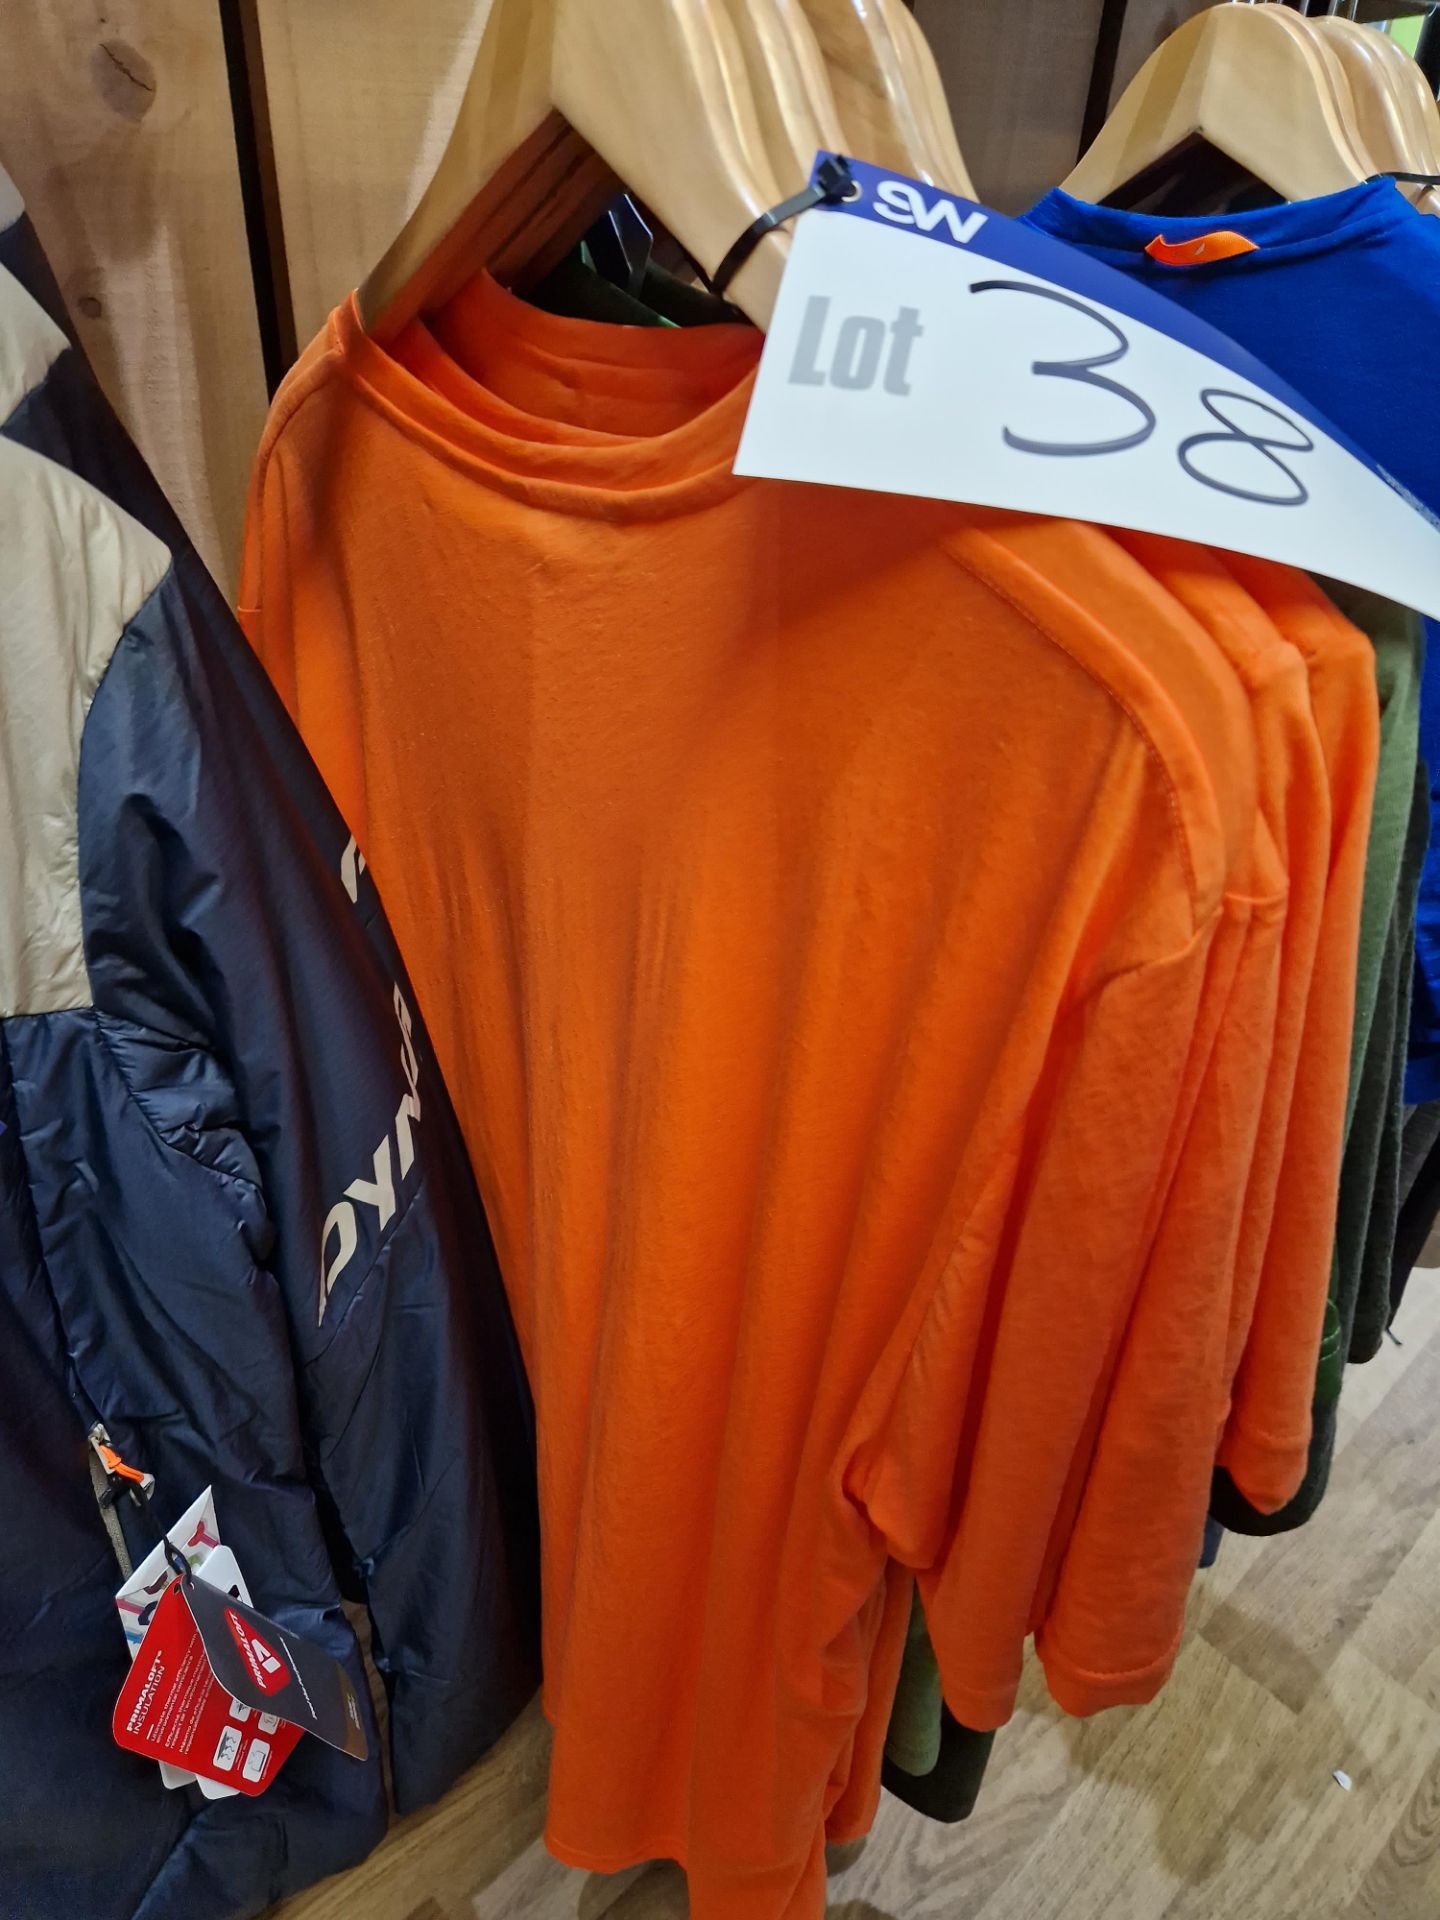 Seven Salewa T-Shirts, Colours: Yucca Melange / Dark Olive / Red Orange, Sizes: Ranging from XS to - Image 3 of 3